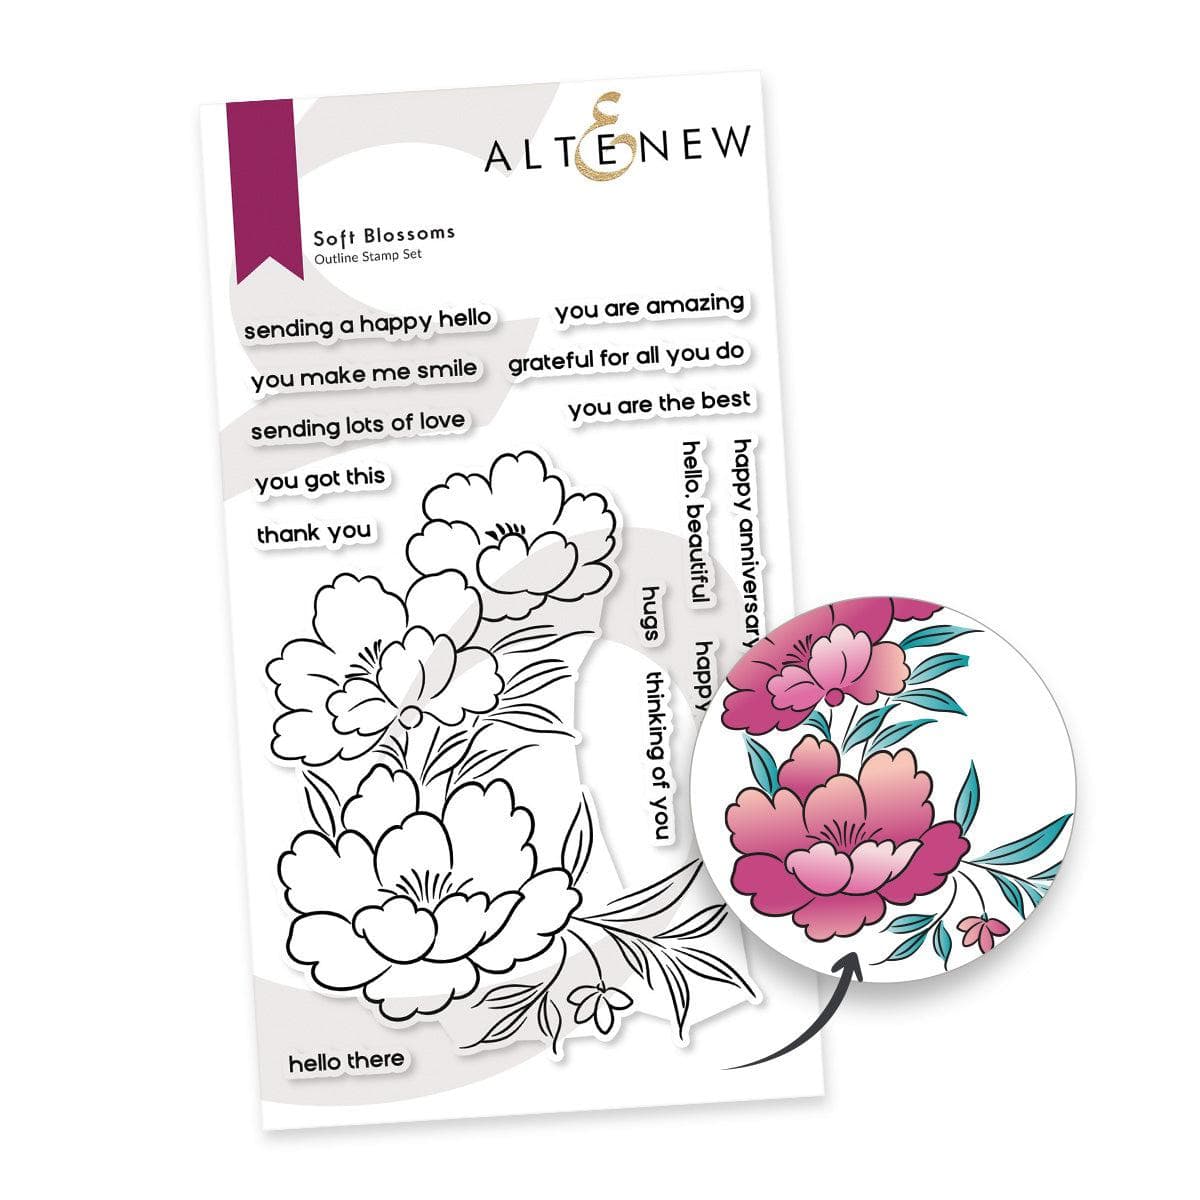 Altenew Soft Blossoms Complete Bundle Stamp Set